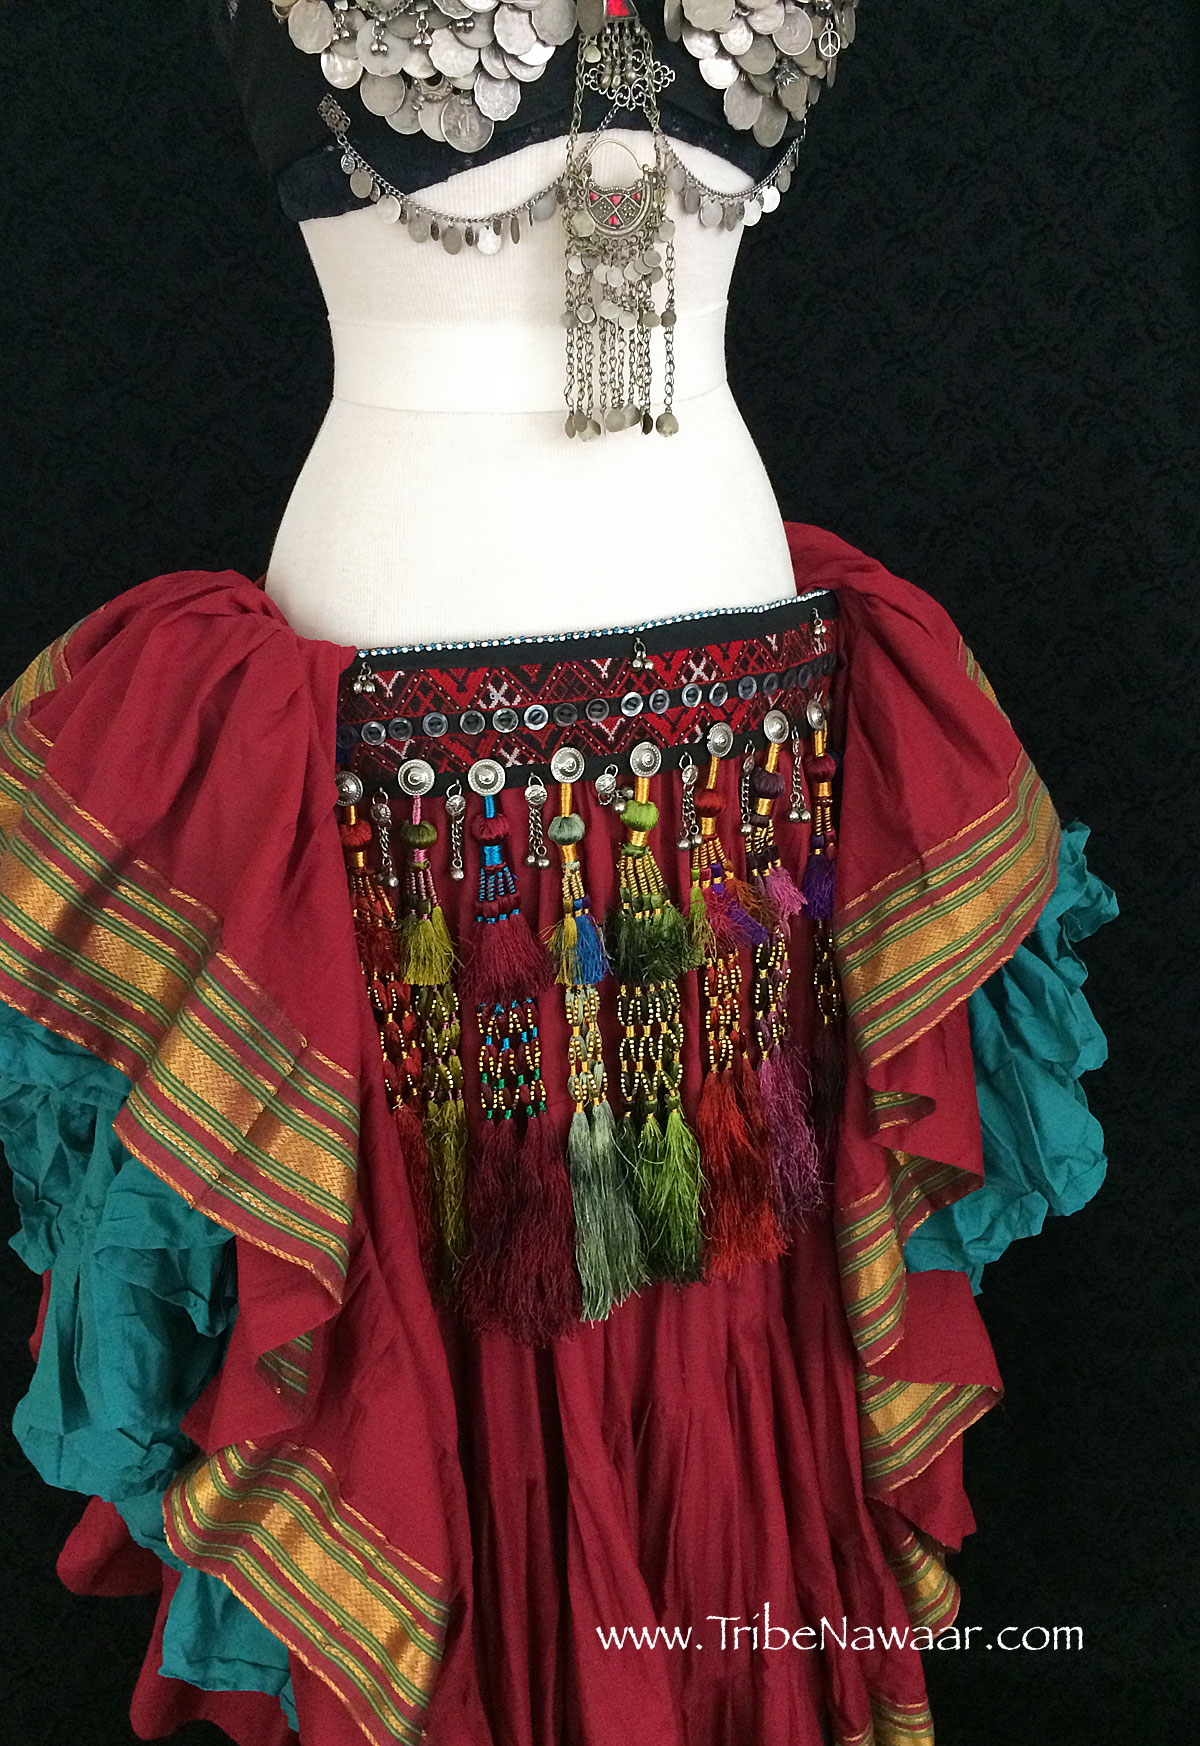 Tribal Fusion Medallion Belt Belly Dance Costume Skirt Pants Hip Waist Jewelry